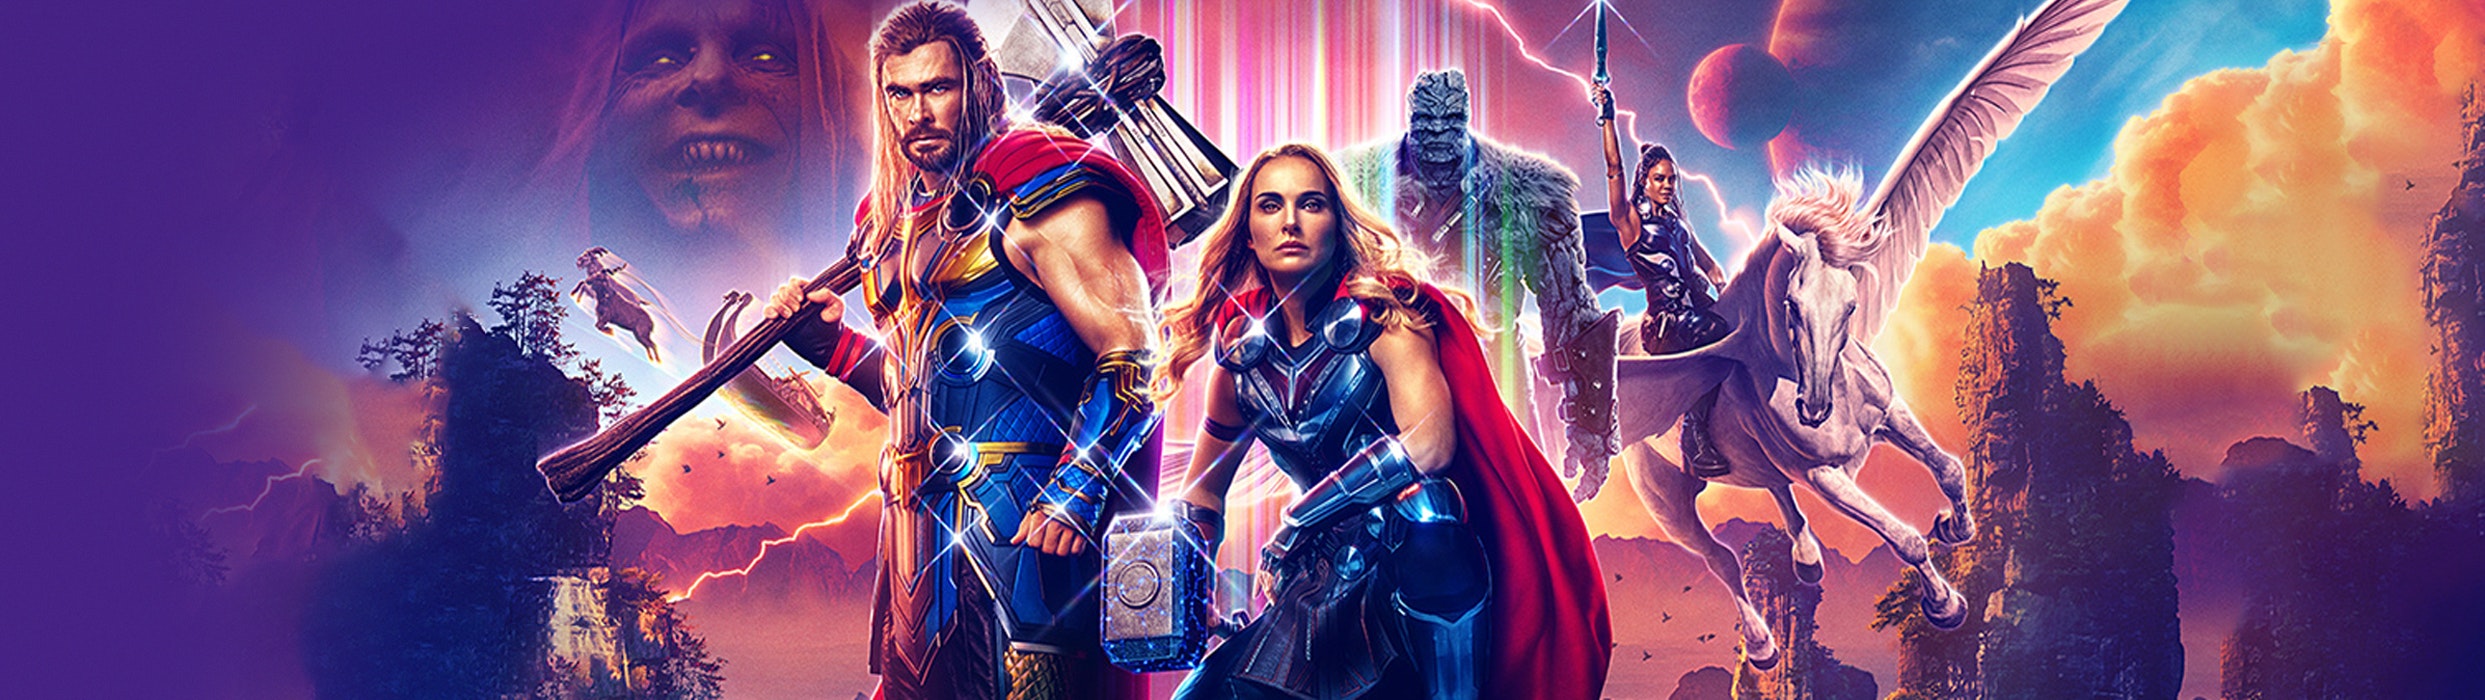 Thor: Love and Thunder - background image